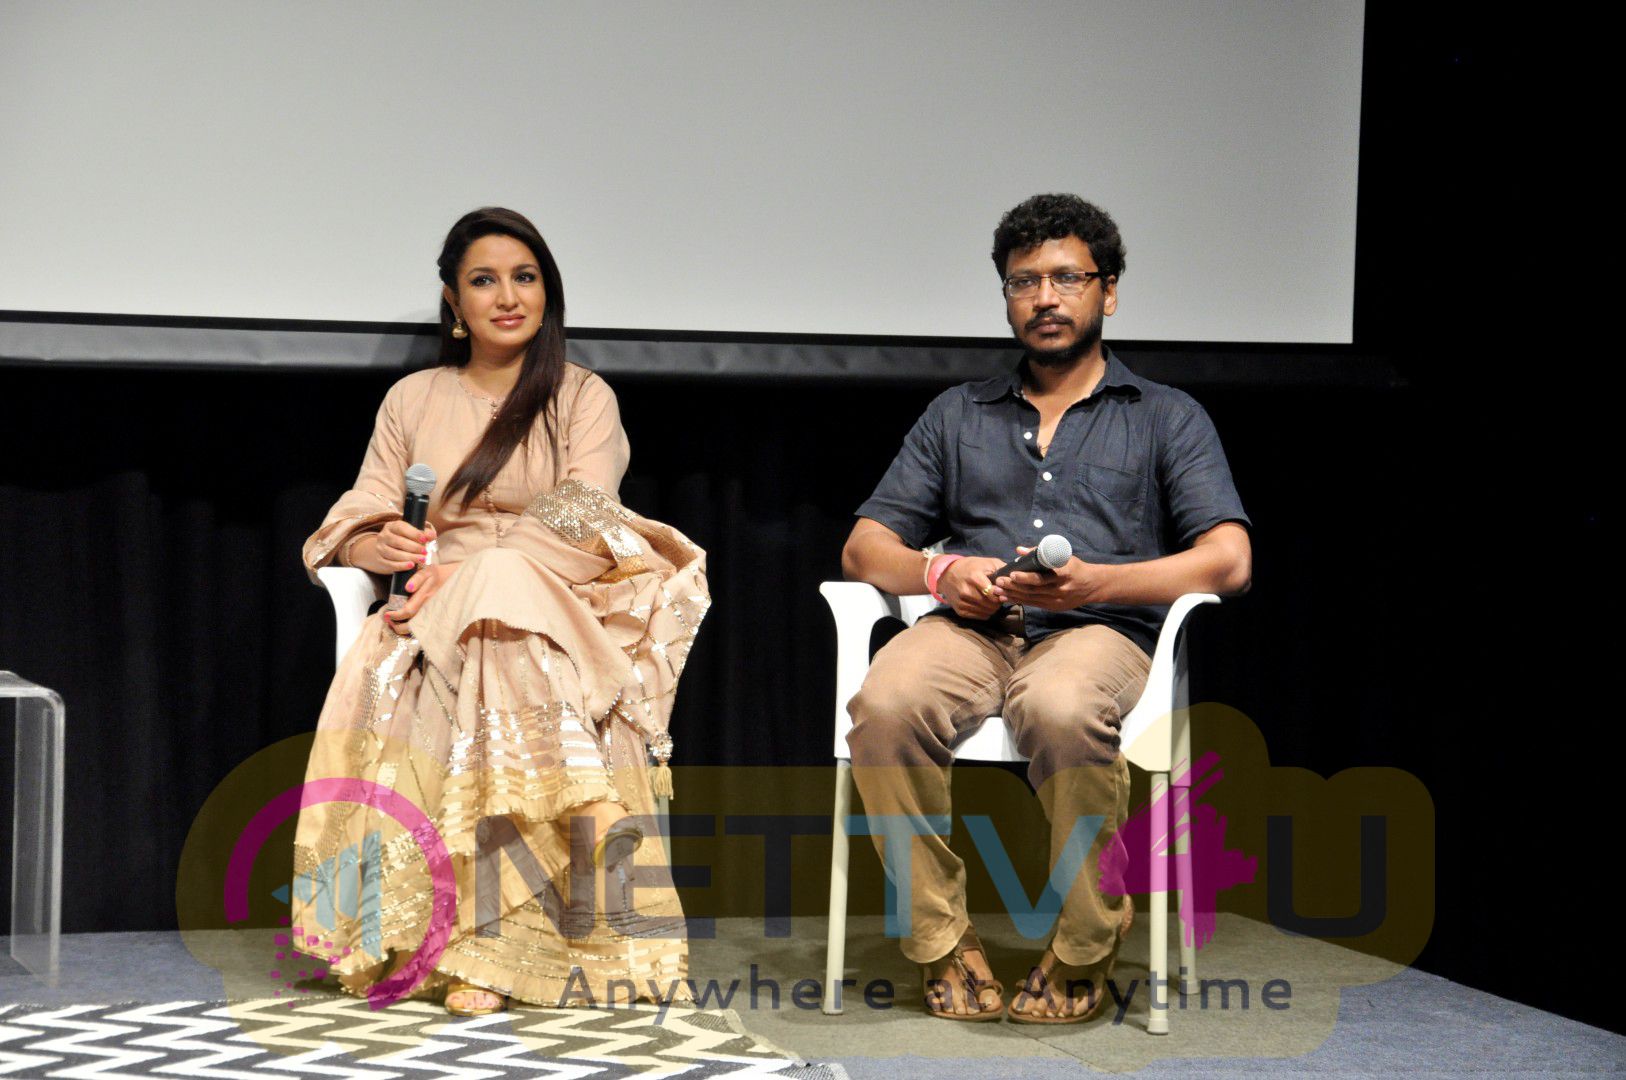 Tisca Chopra At New York Indian Film Festival 2016 Inauguration Photos Hindi Gallery